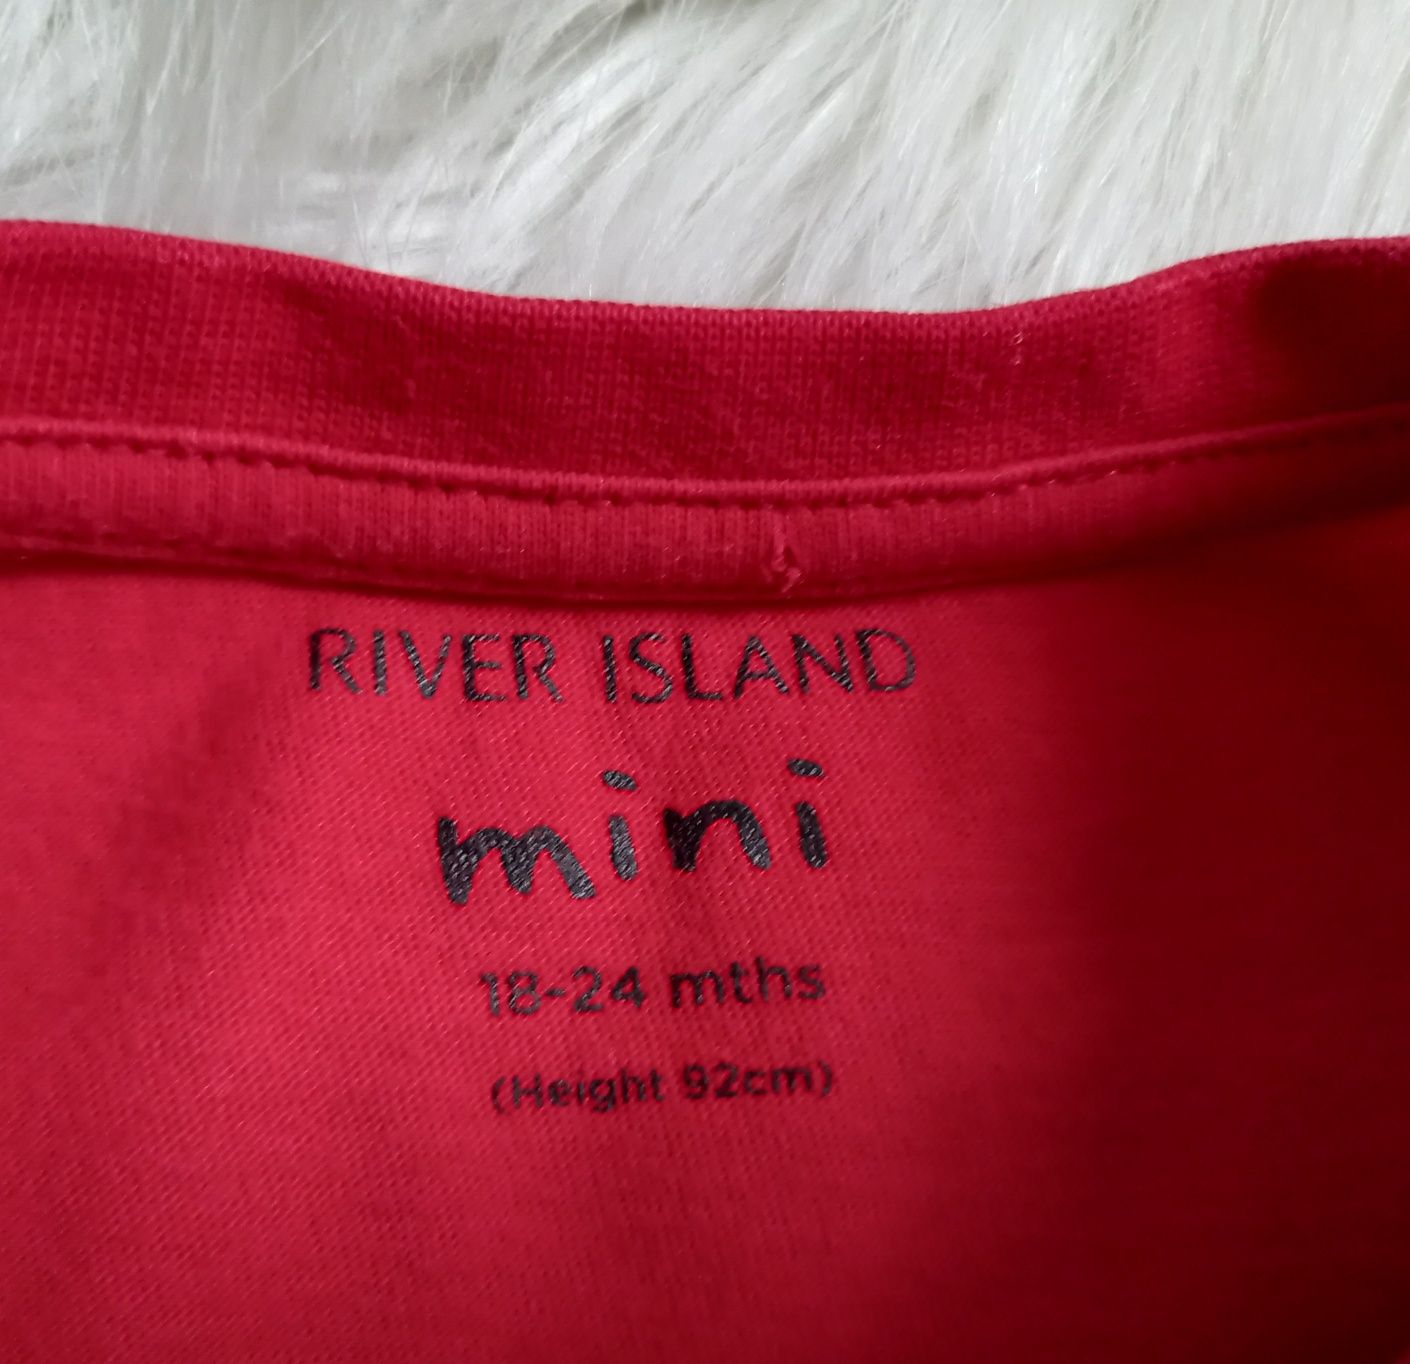 Bluza T-shirt River Island rozmiar 86/92